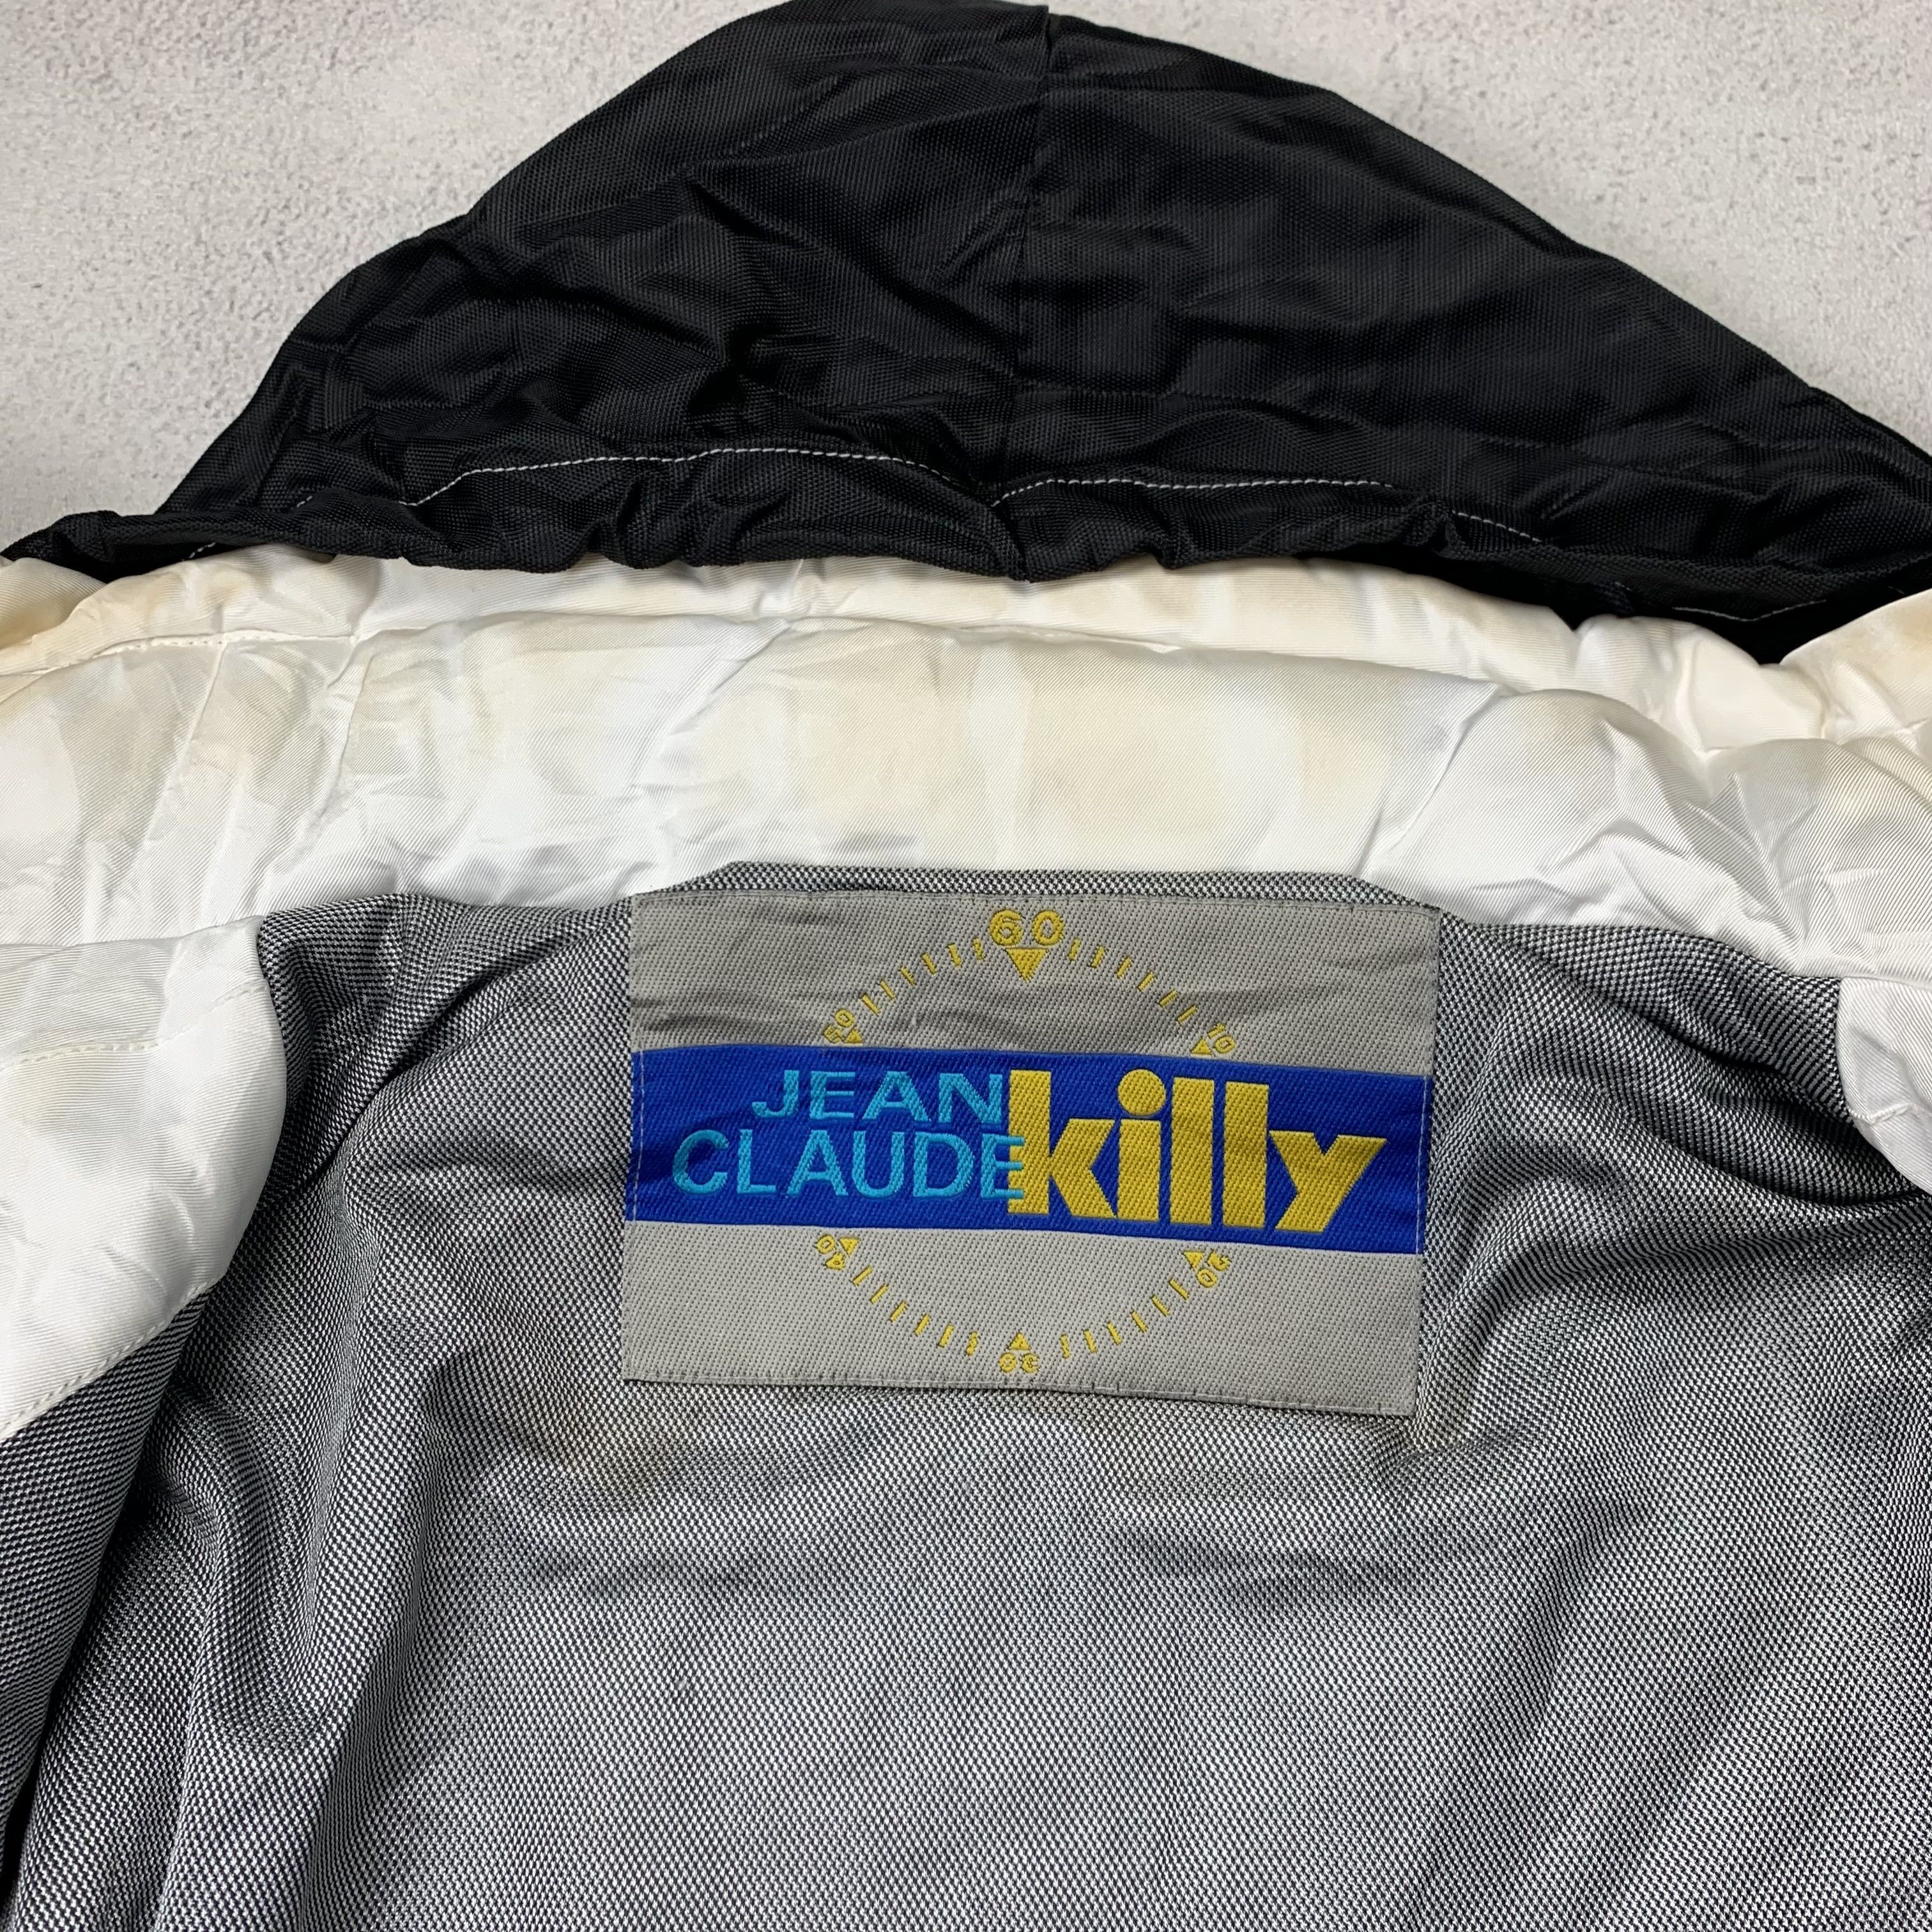 Vintage Vintage Jean Claude Killy Ski Jacket Winter Puffer Size US XL / EU 56 / 4 - 9 Thumbnail